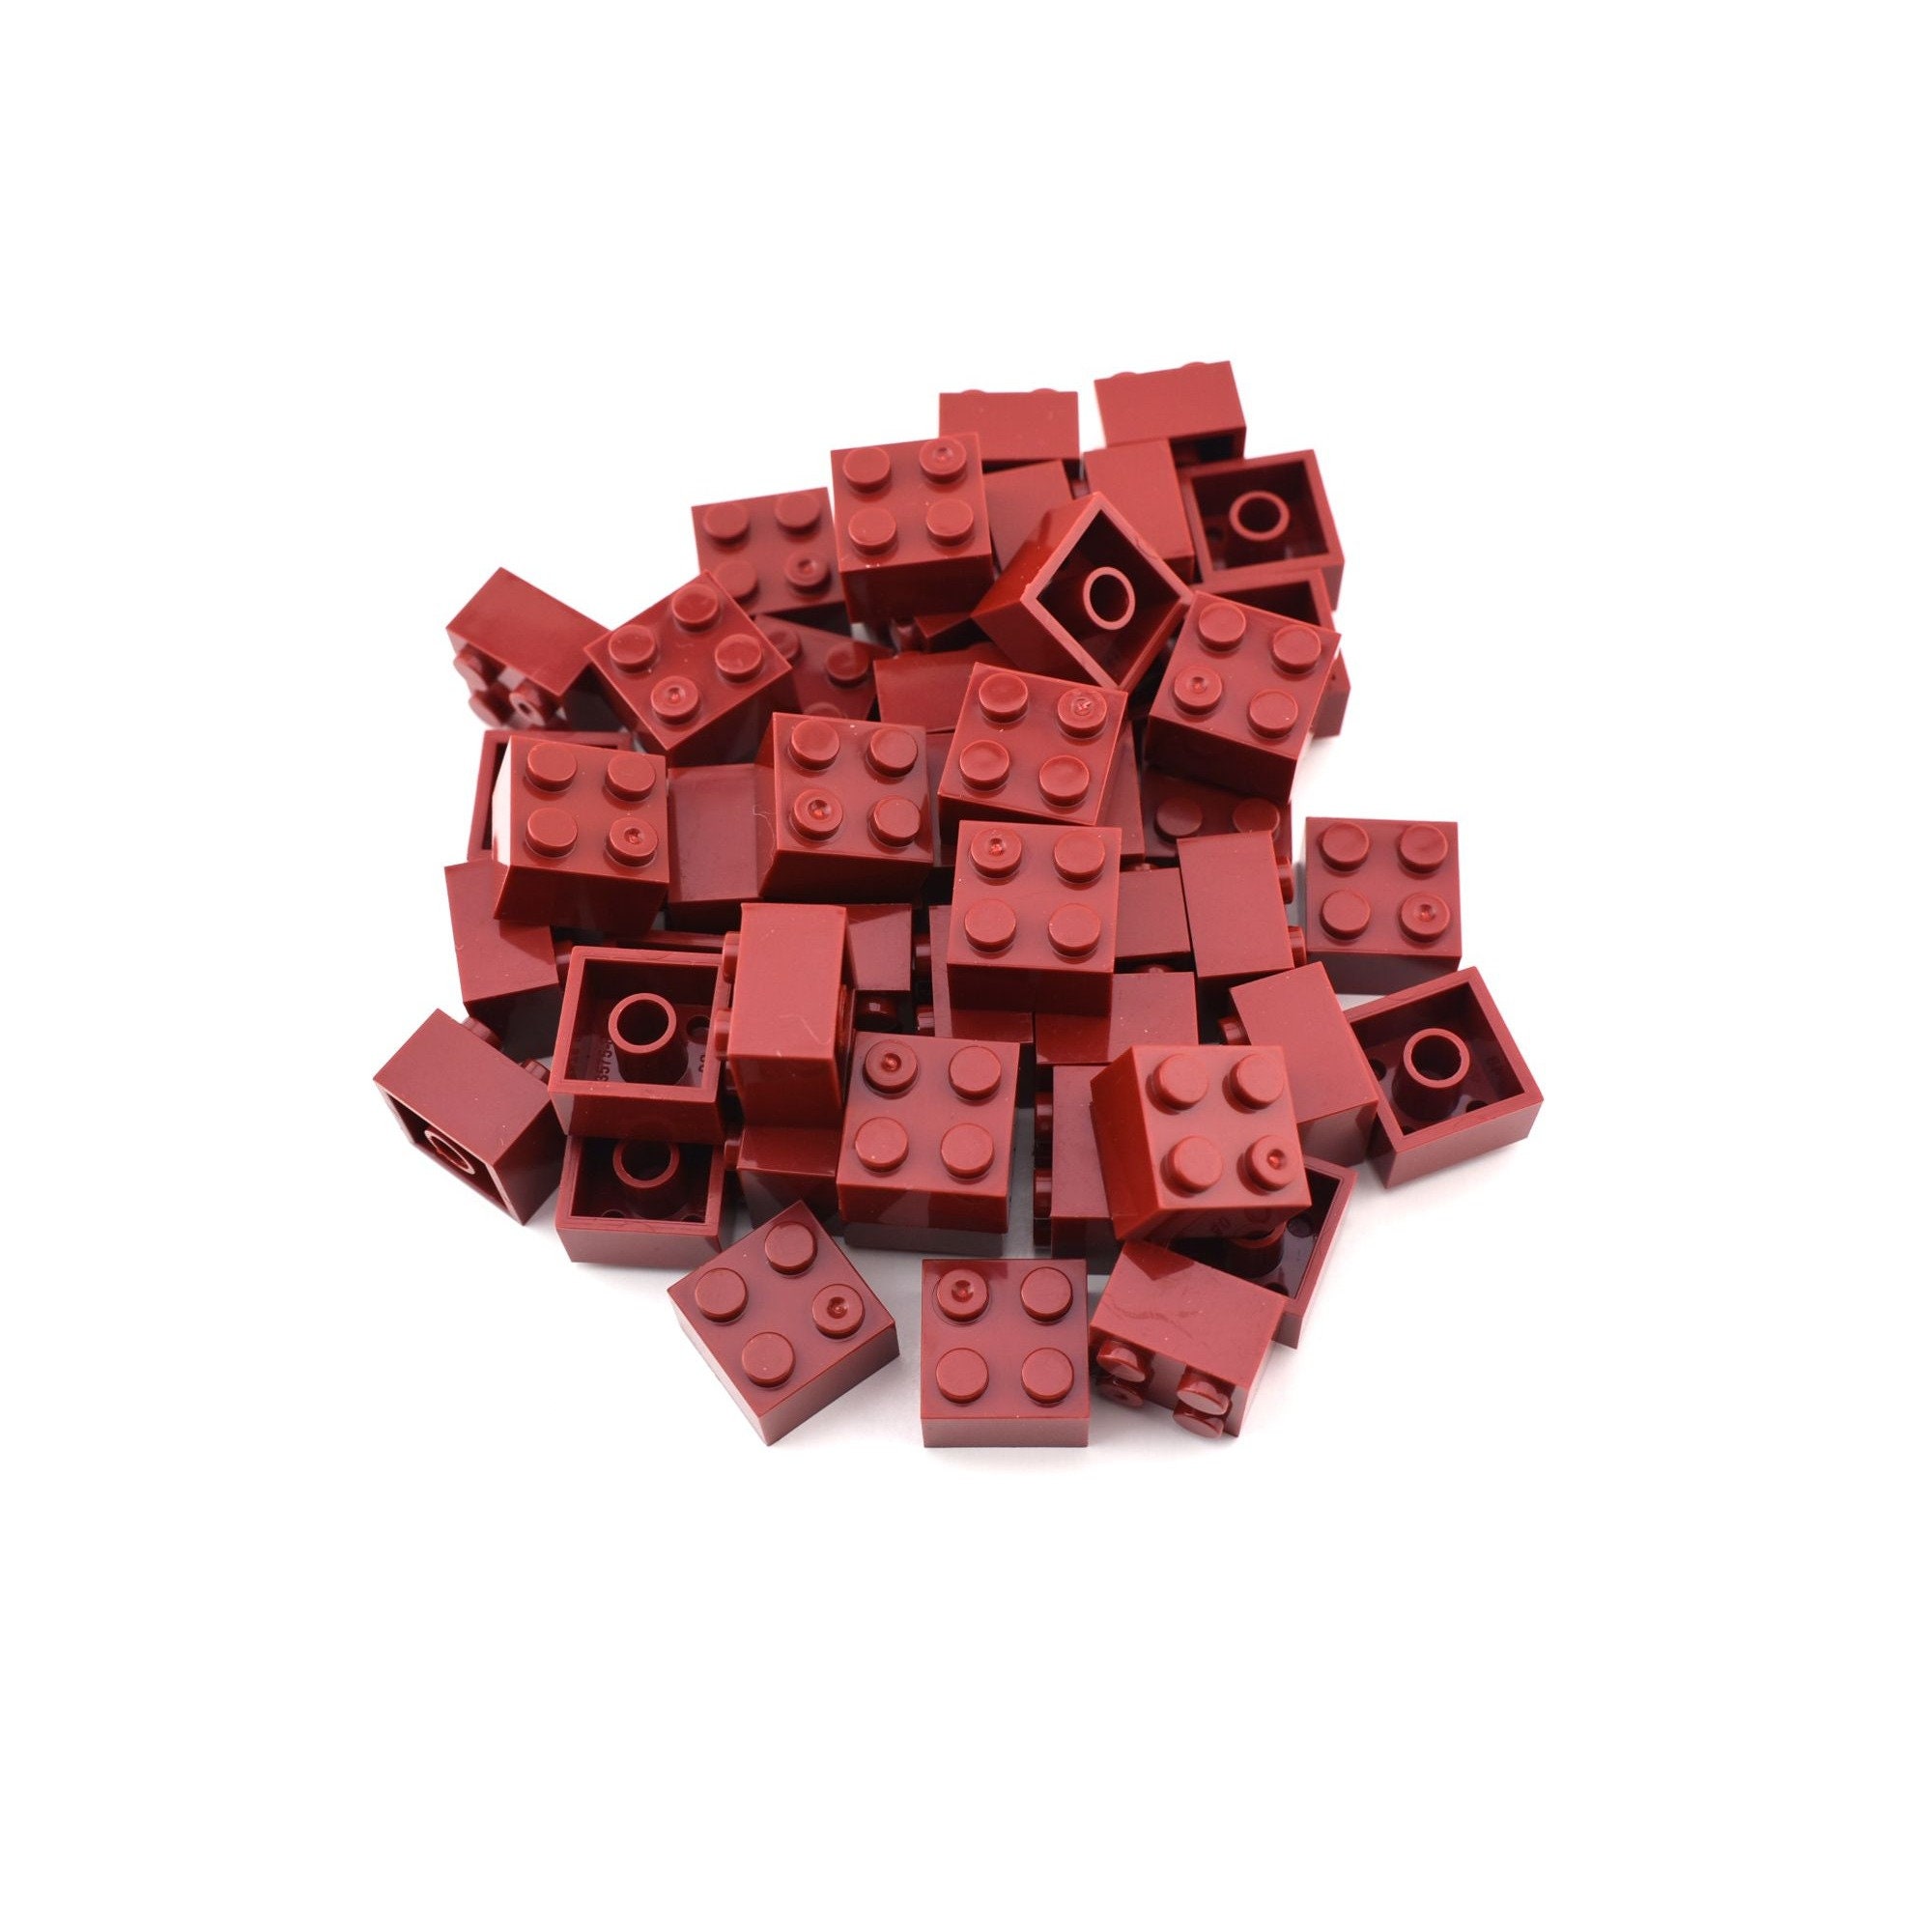 LEGO Parts and Pieces: 2x2 Black Brick x50